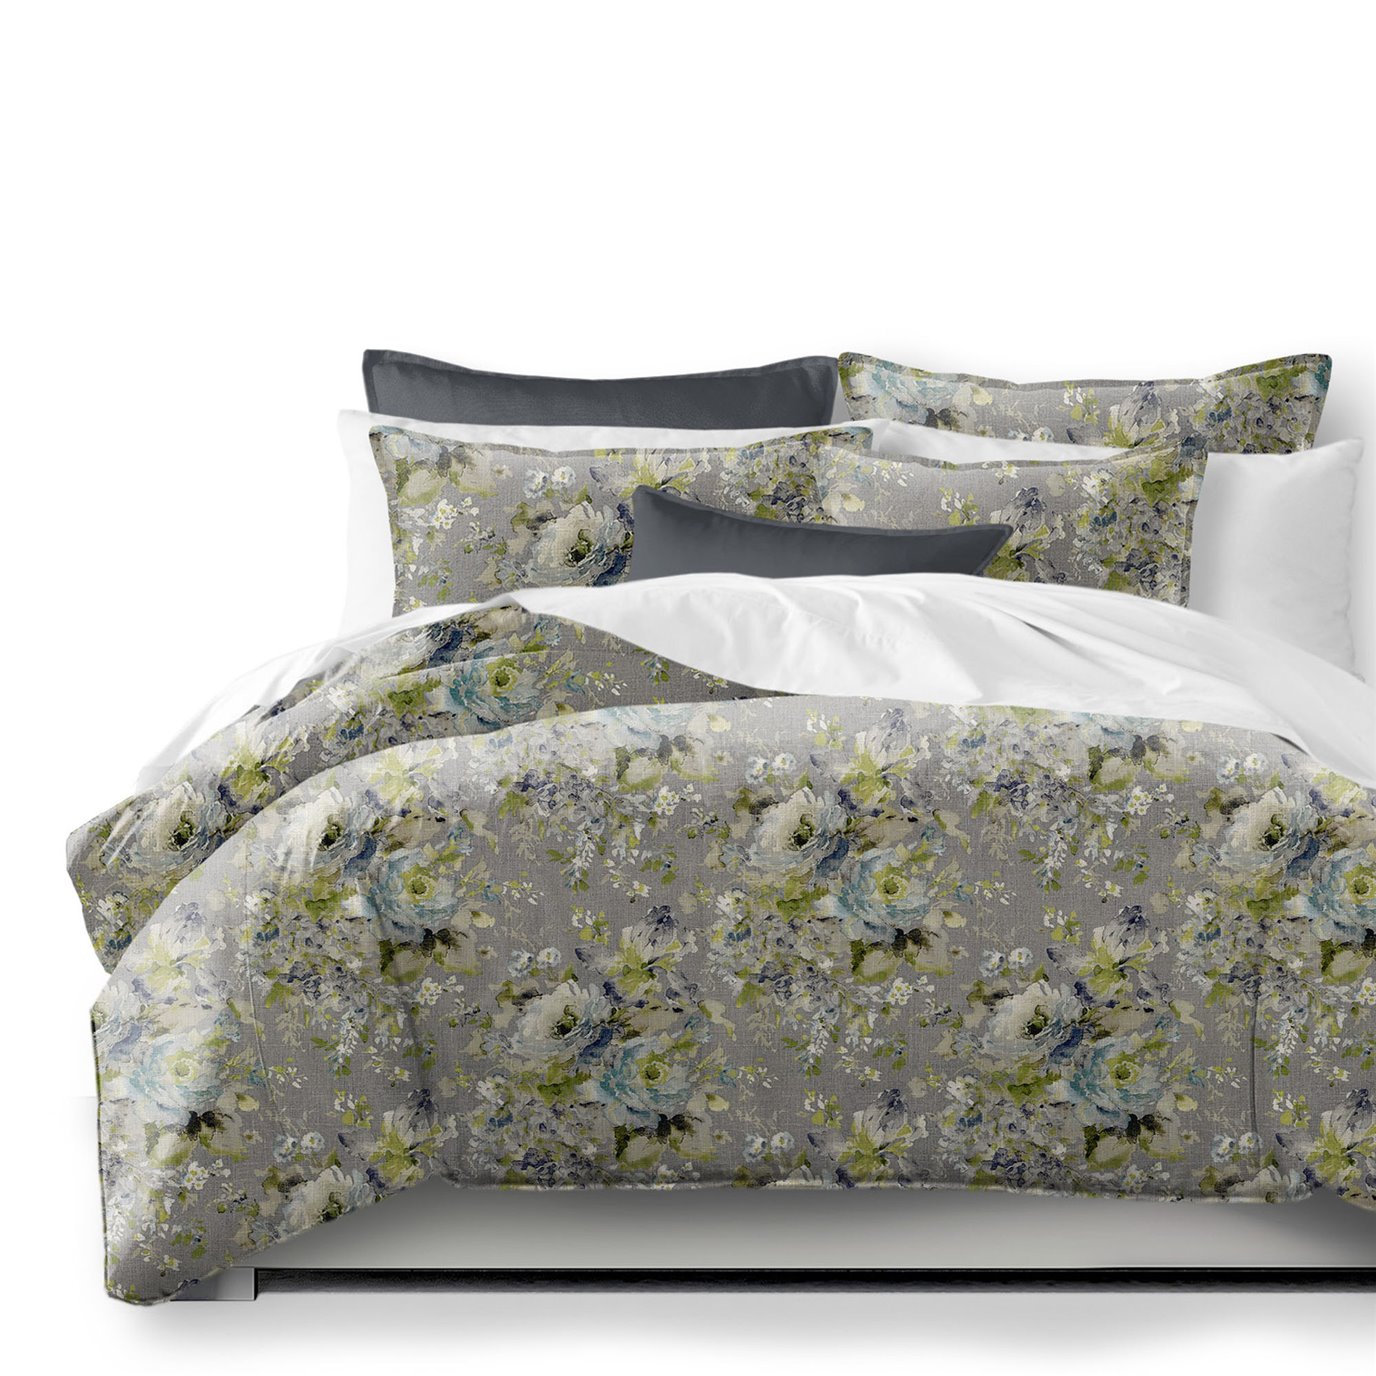 Athena Linen Heather Gray Comforter and Pillow Sham(s) Set - Size King / California King